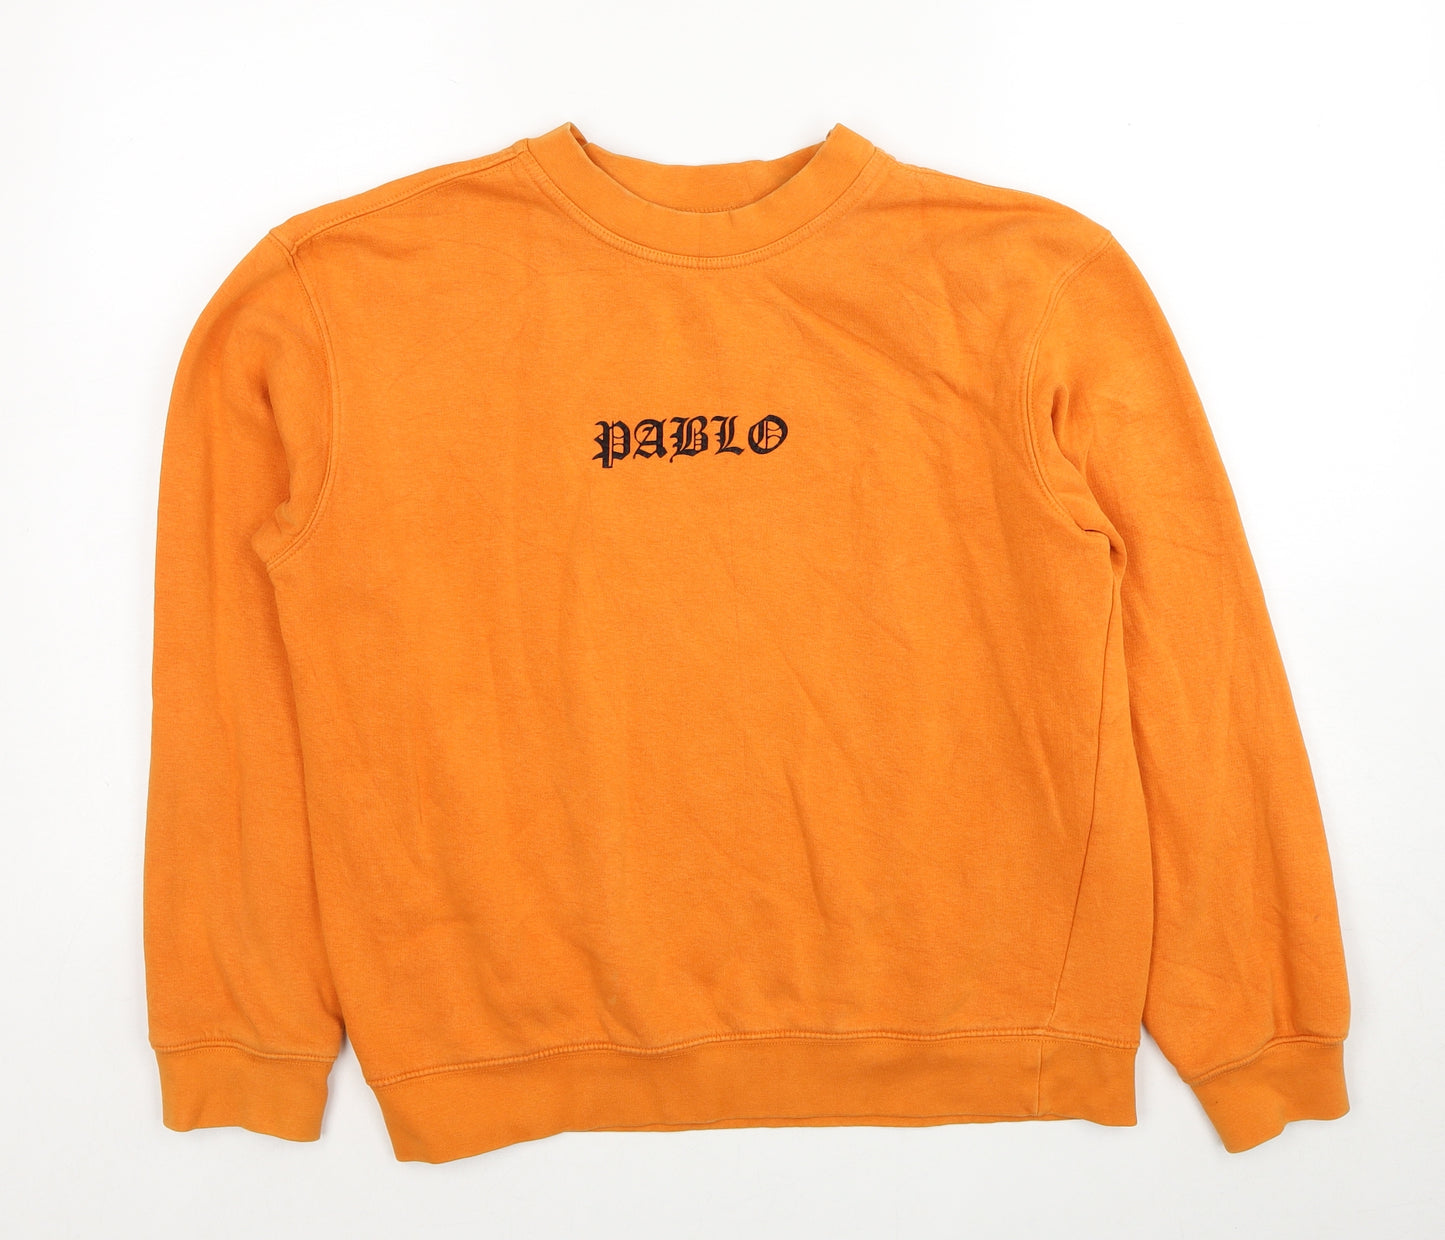 BC Clothing Womens Orange Cotton Pullover Sweatshirt Size S Pullover - Pablo Unisex